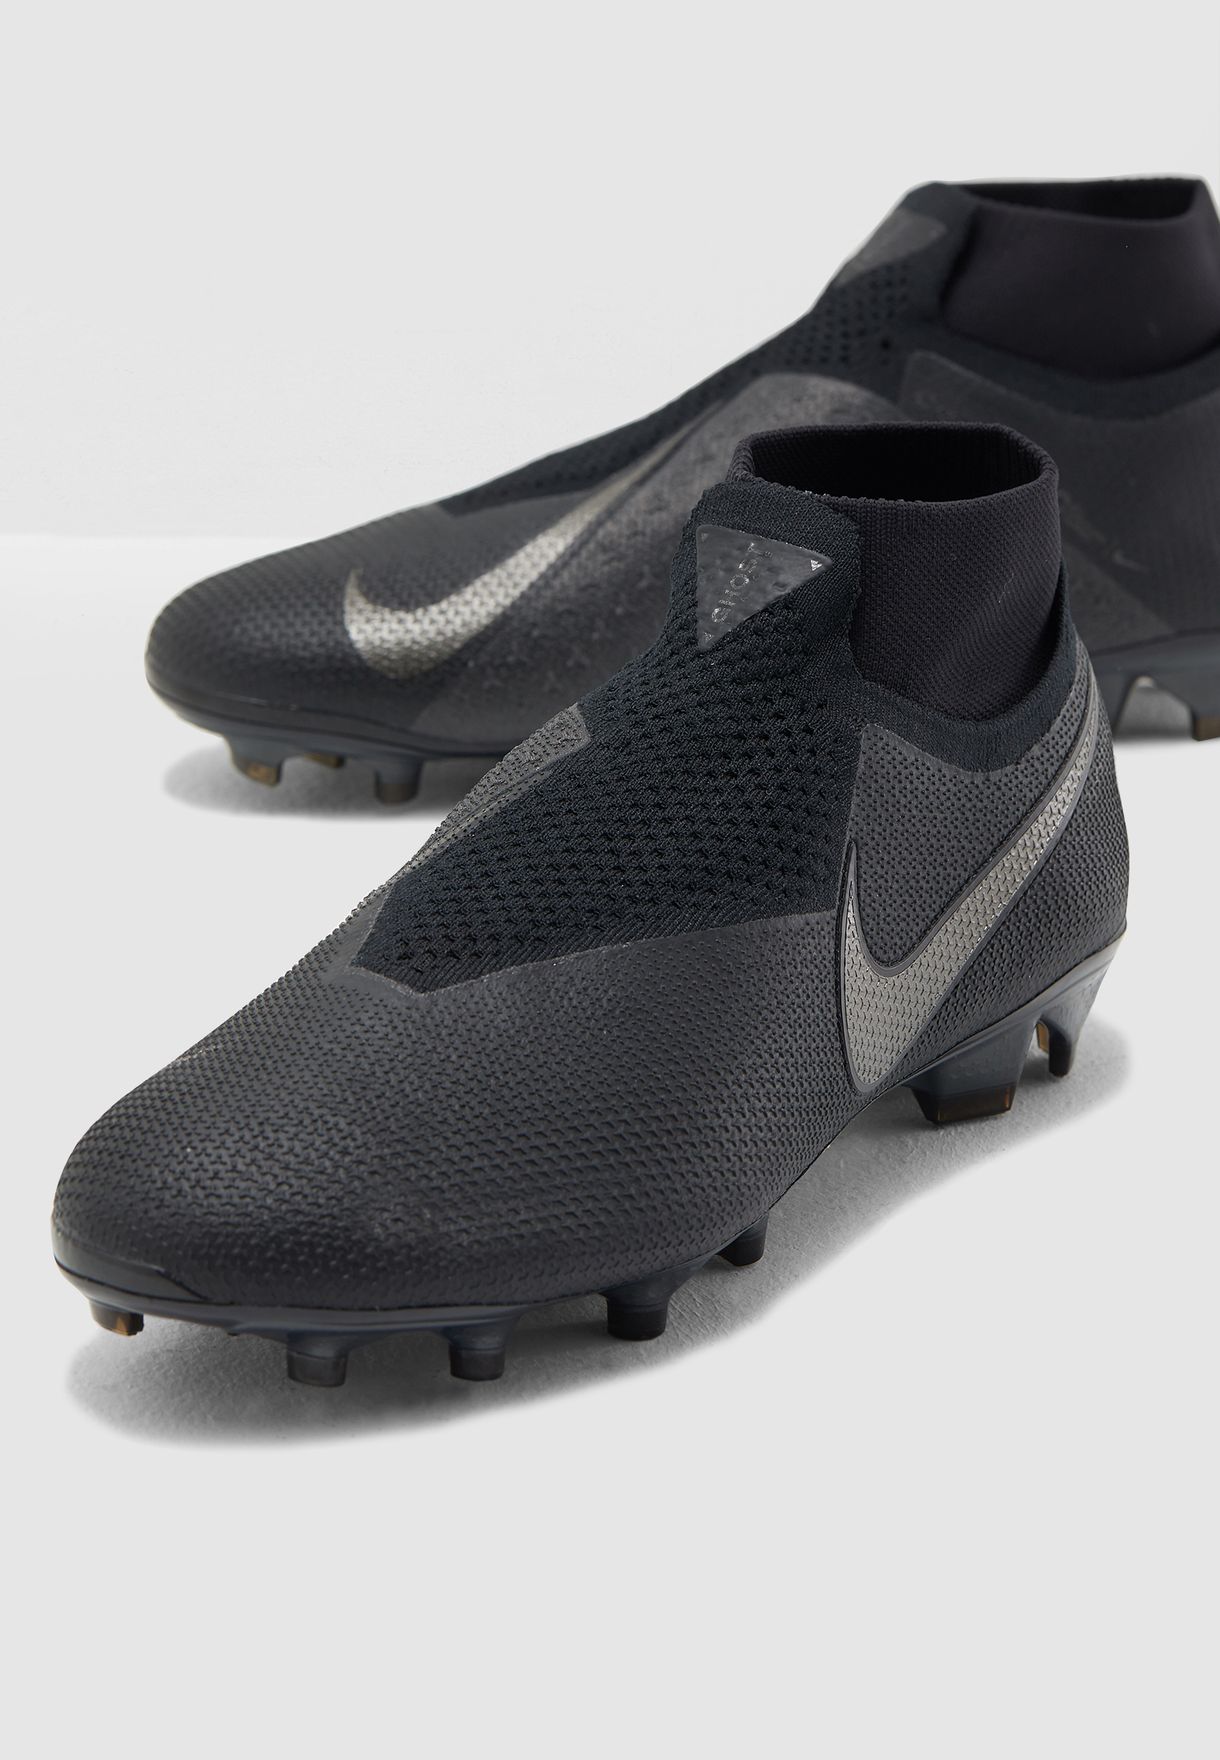 Nike Hypervenom Phantom III FG Flyknit ACC Soccer Cleats